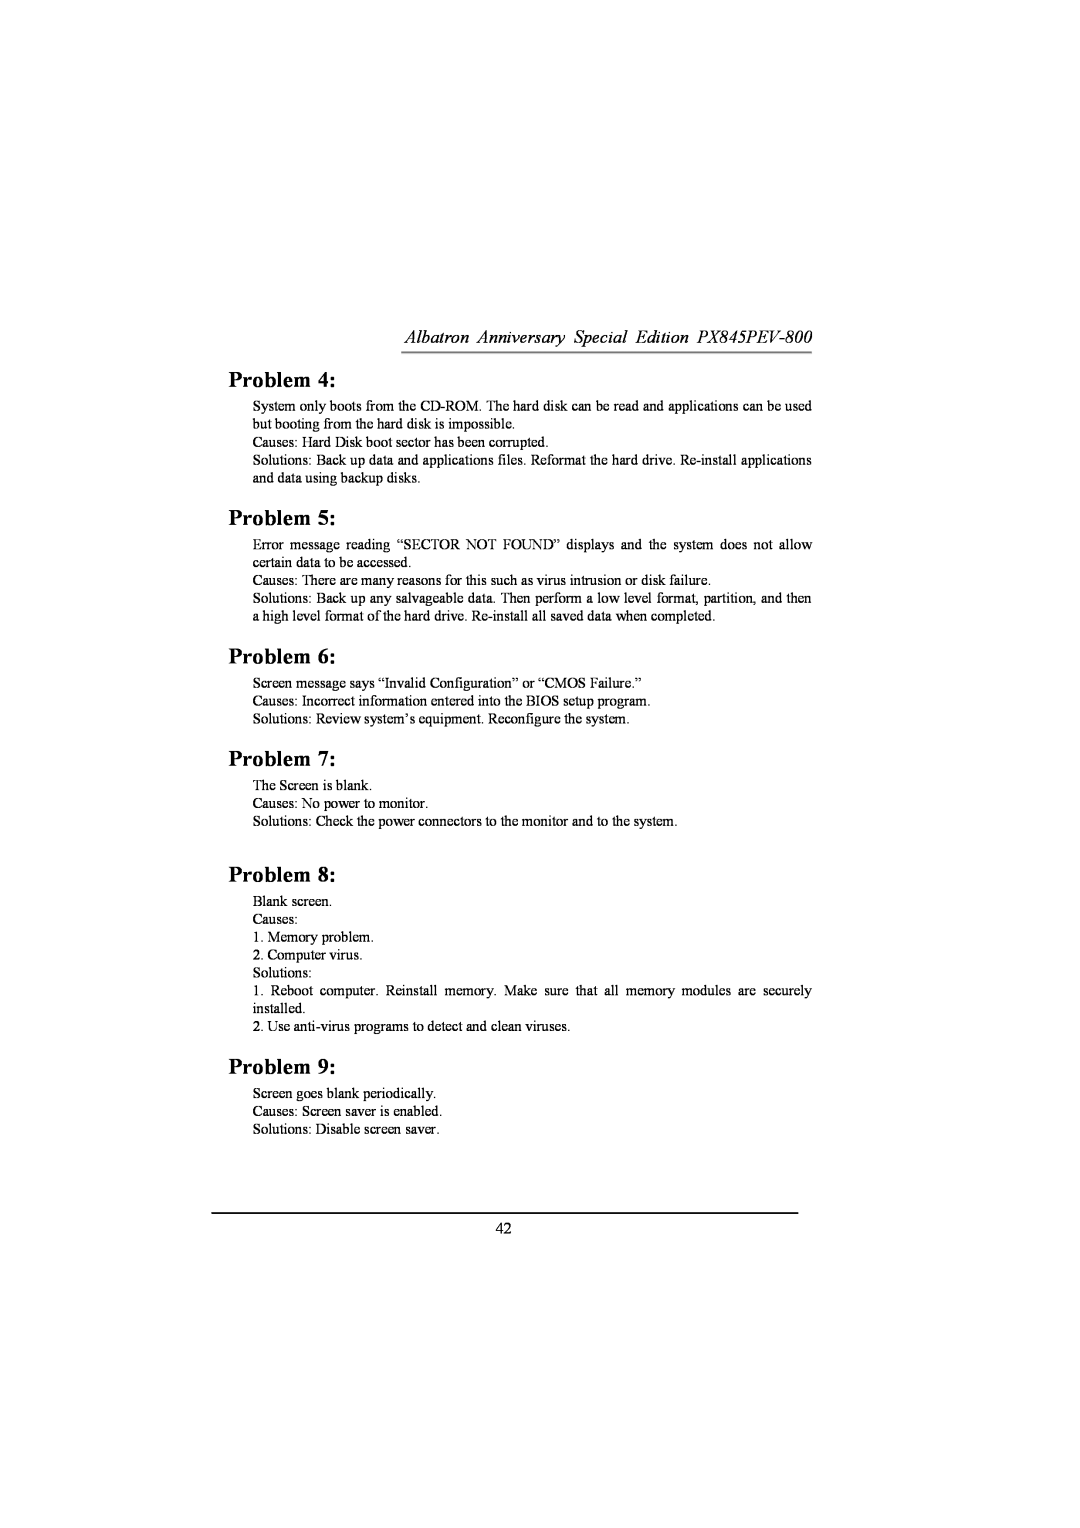 Albatron Technology manual Problem, Albatron Anniversary Special Edition PX845PEV-800 